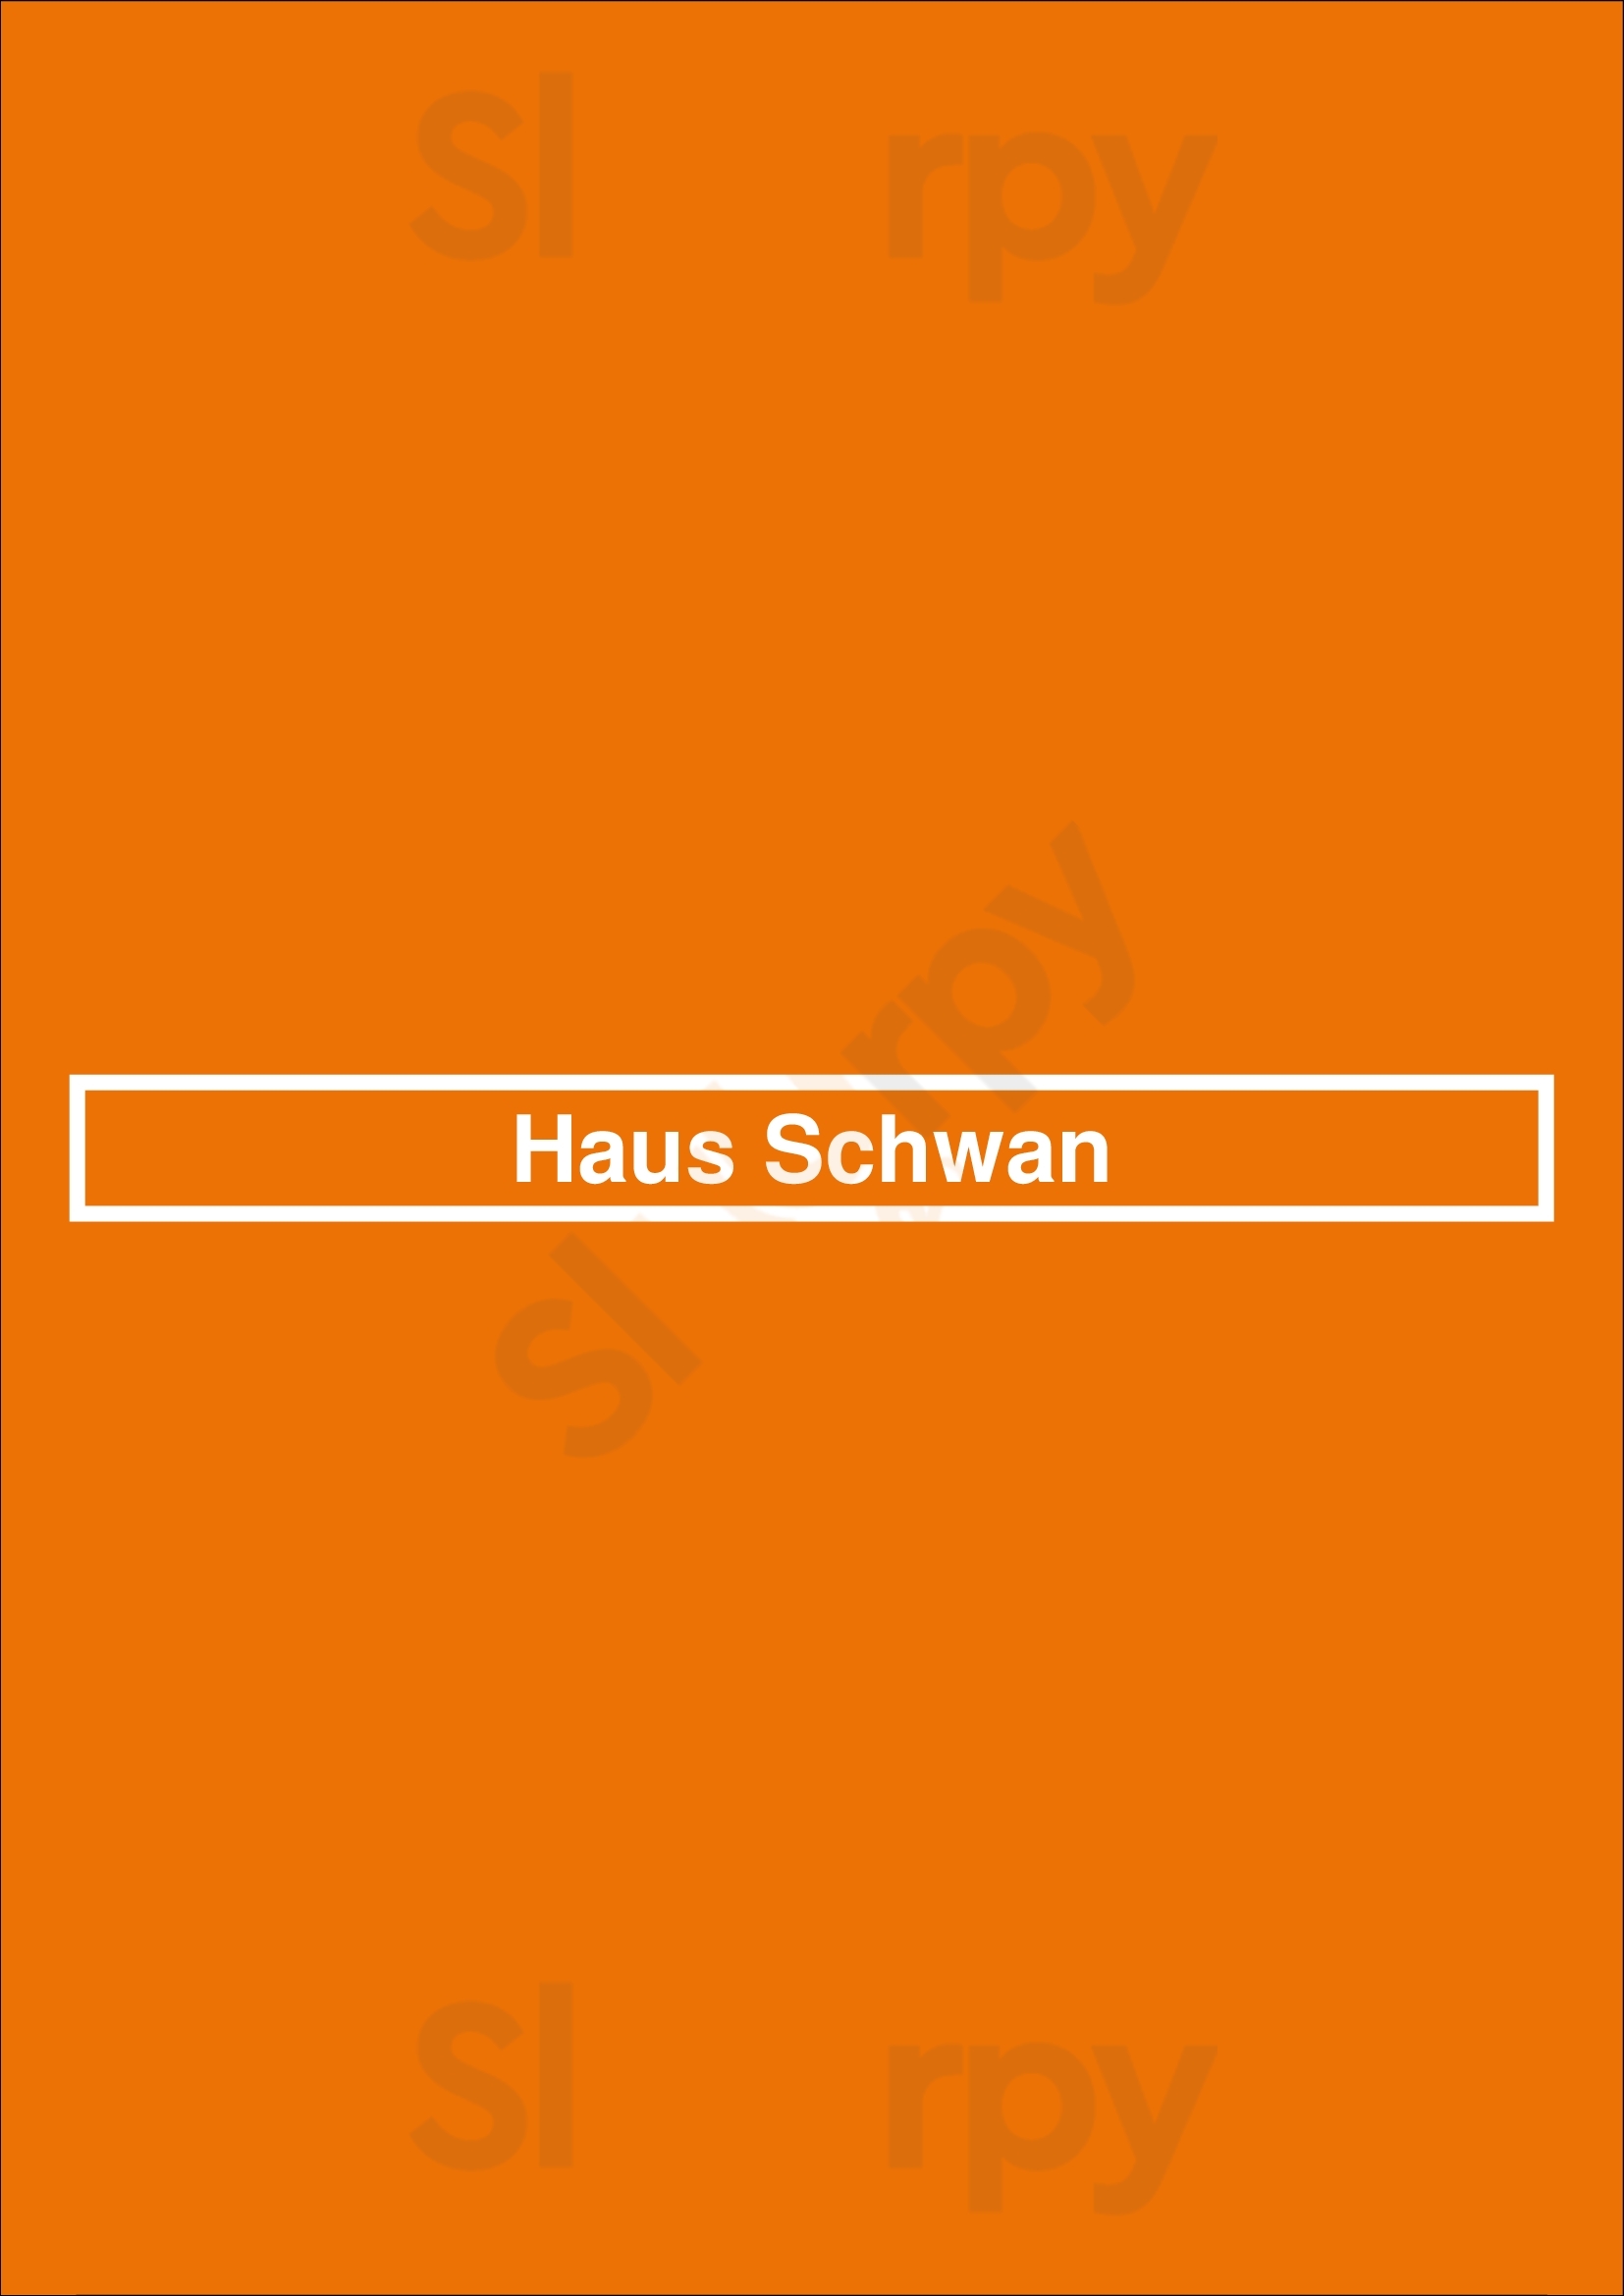 Haus Schwan Köln Menu - 1